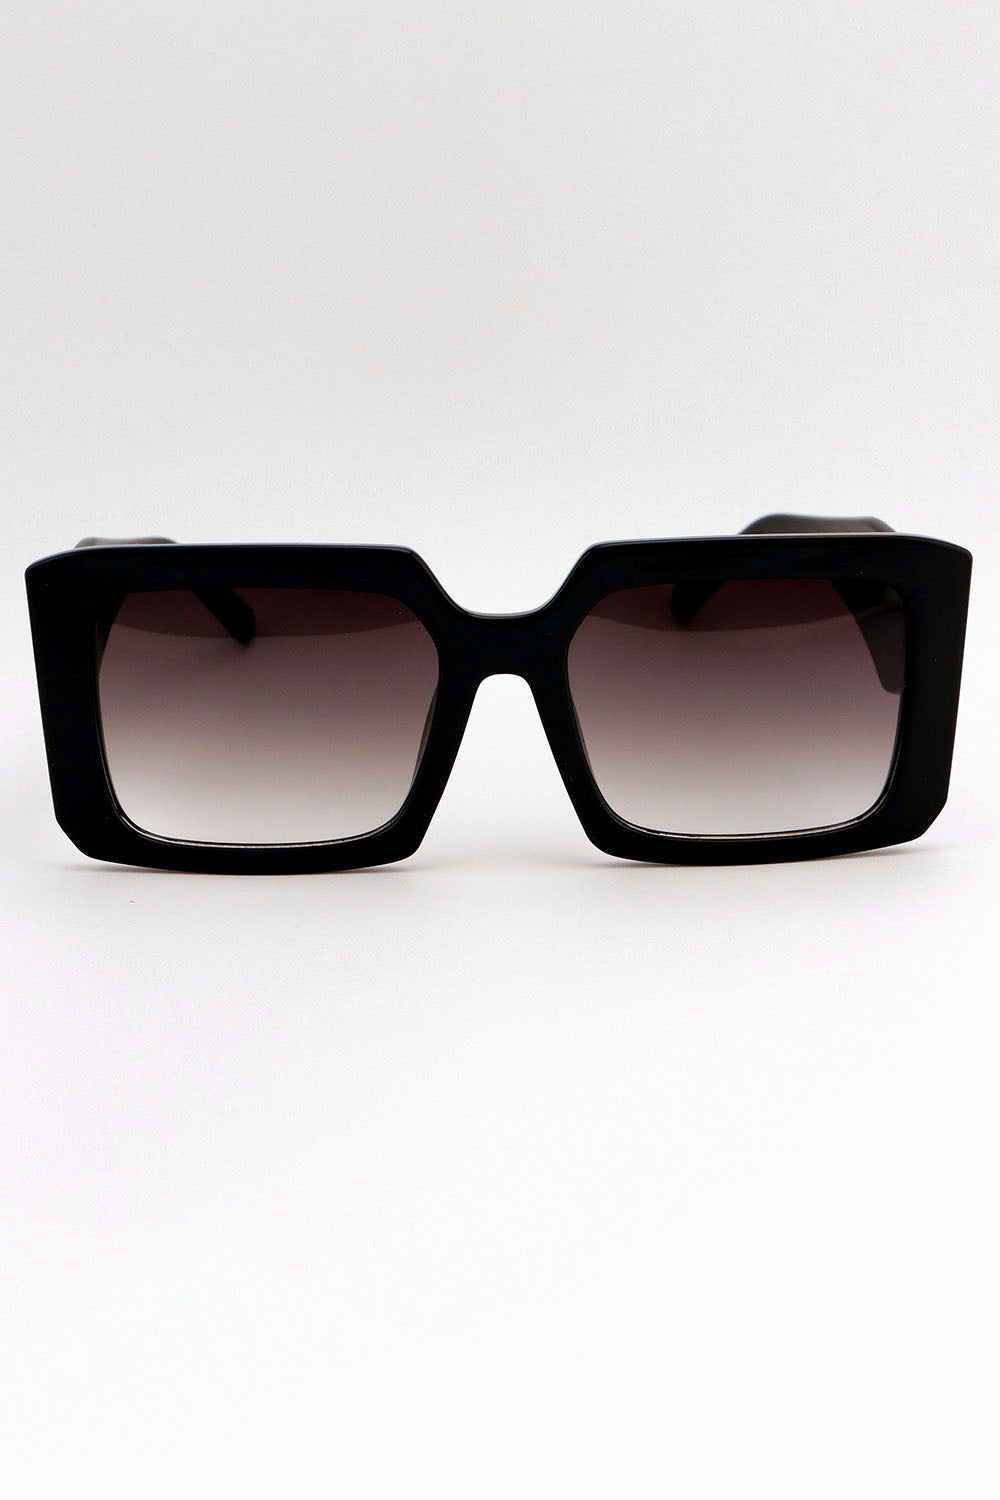 vintage goth sunglasses